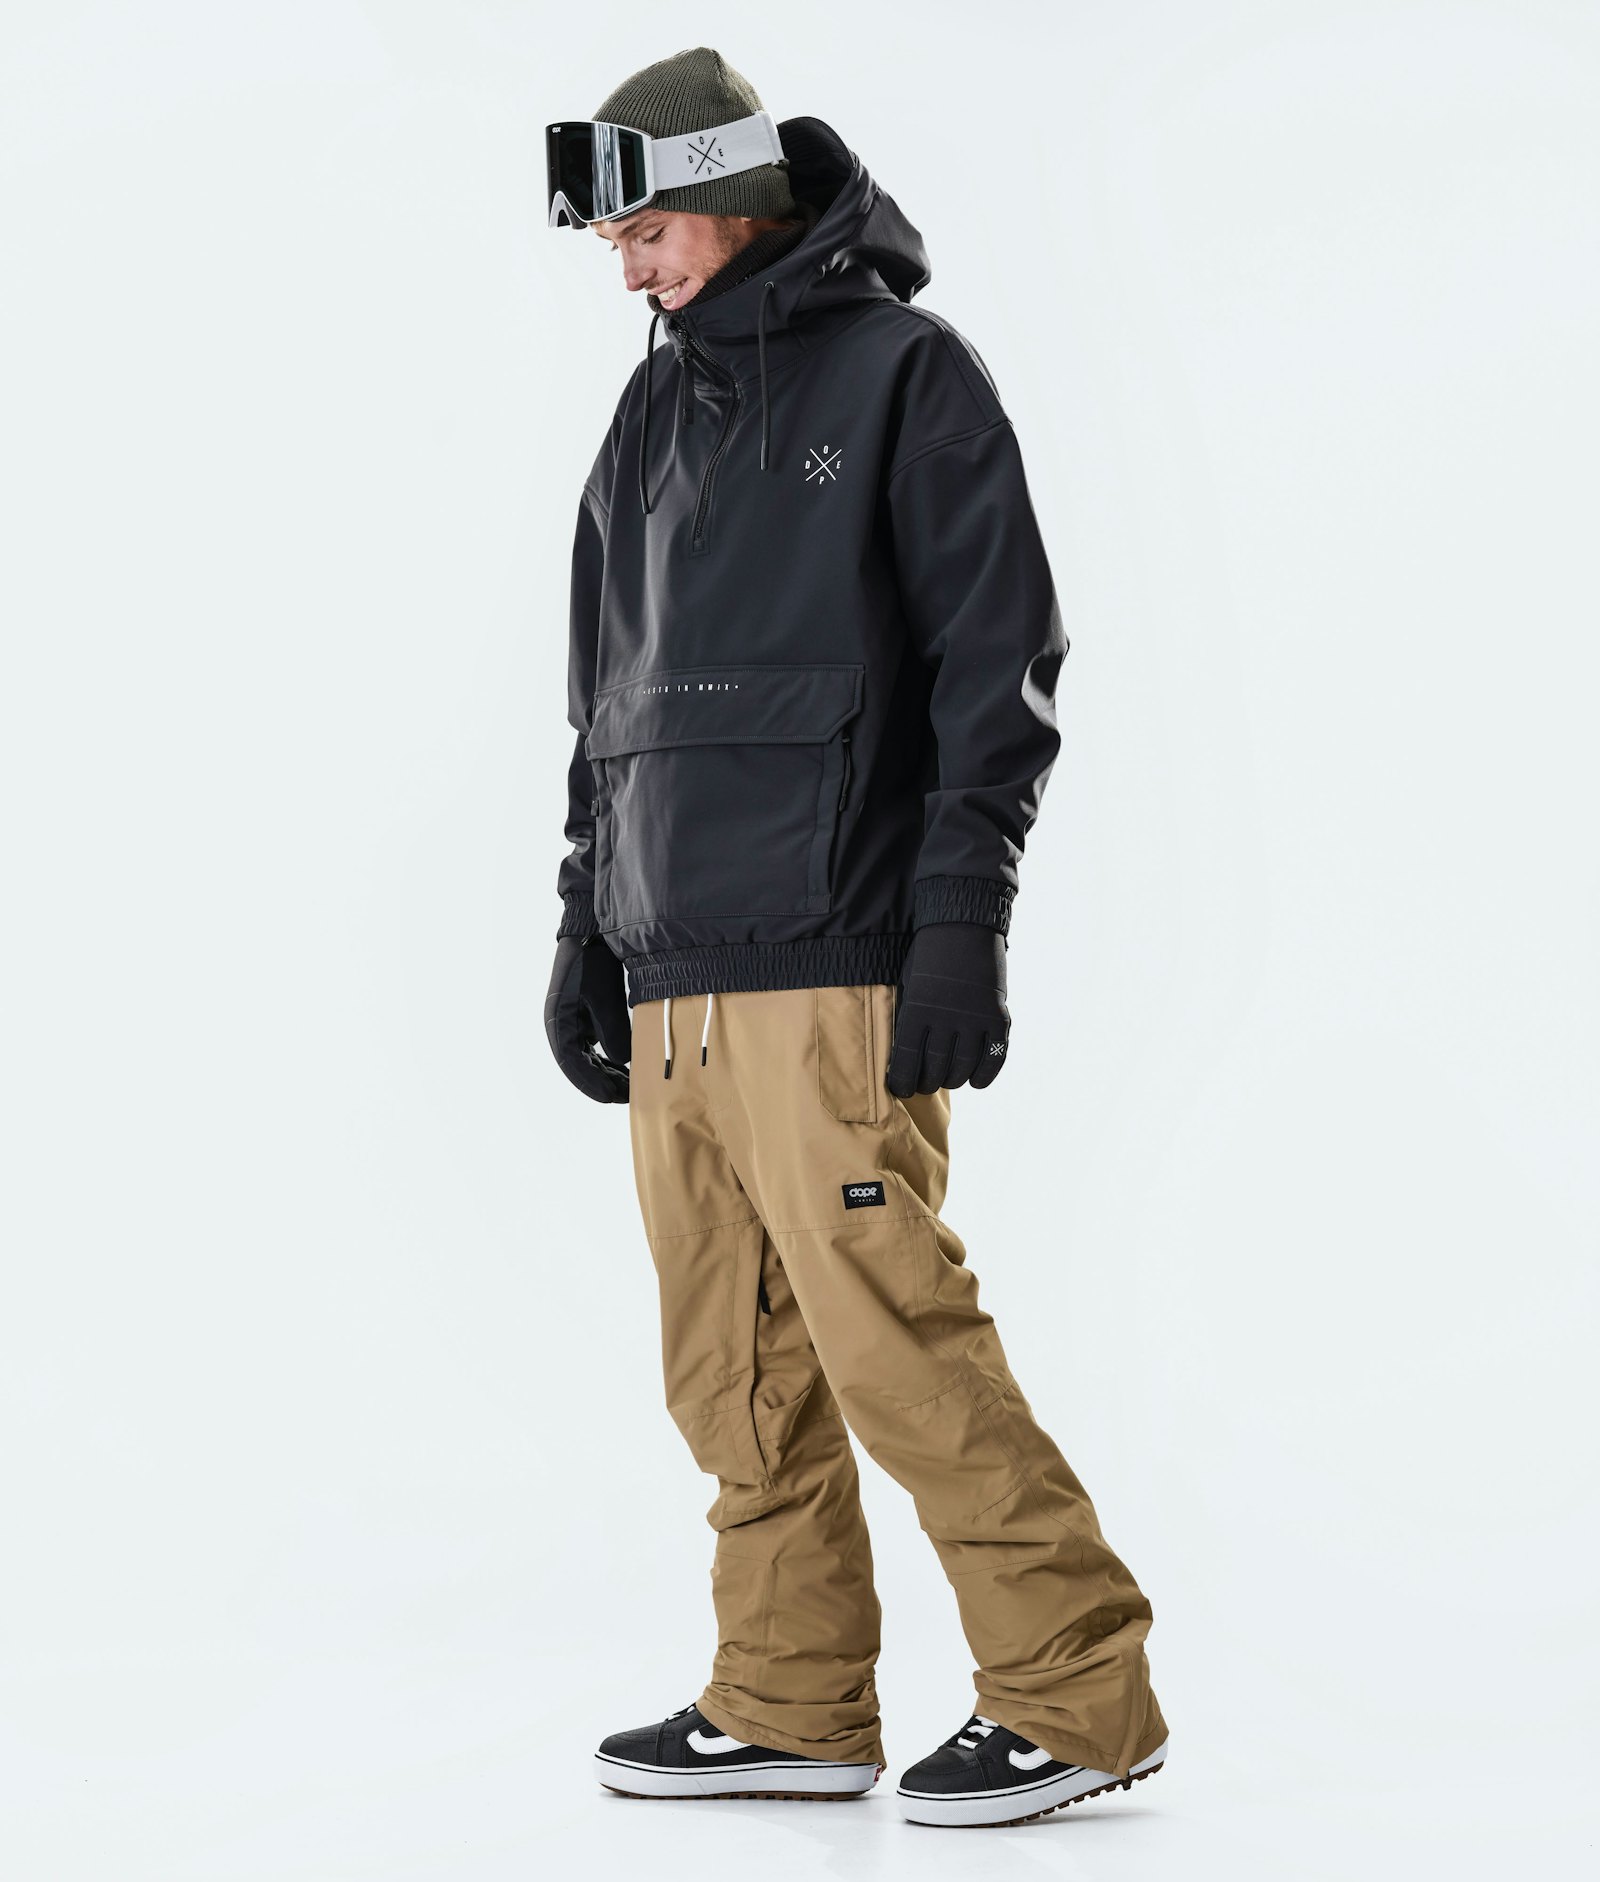 Cyclone 2020 Veste Snowboard Homme Black